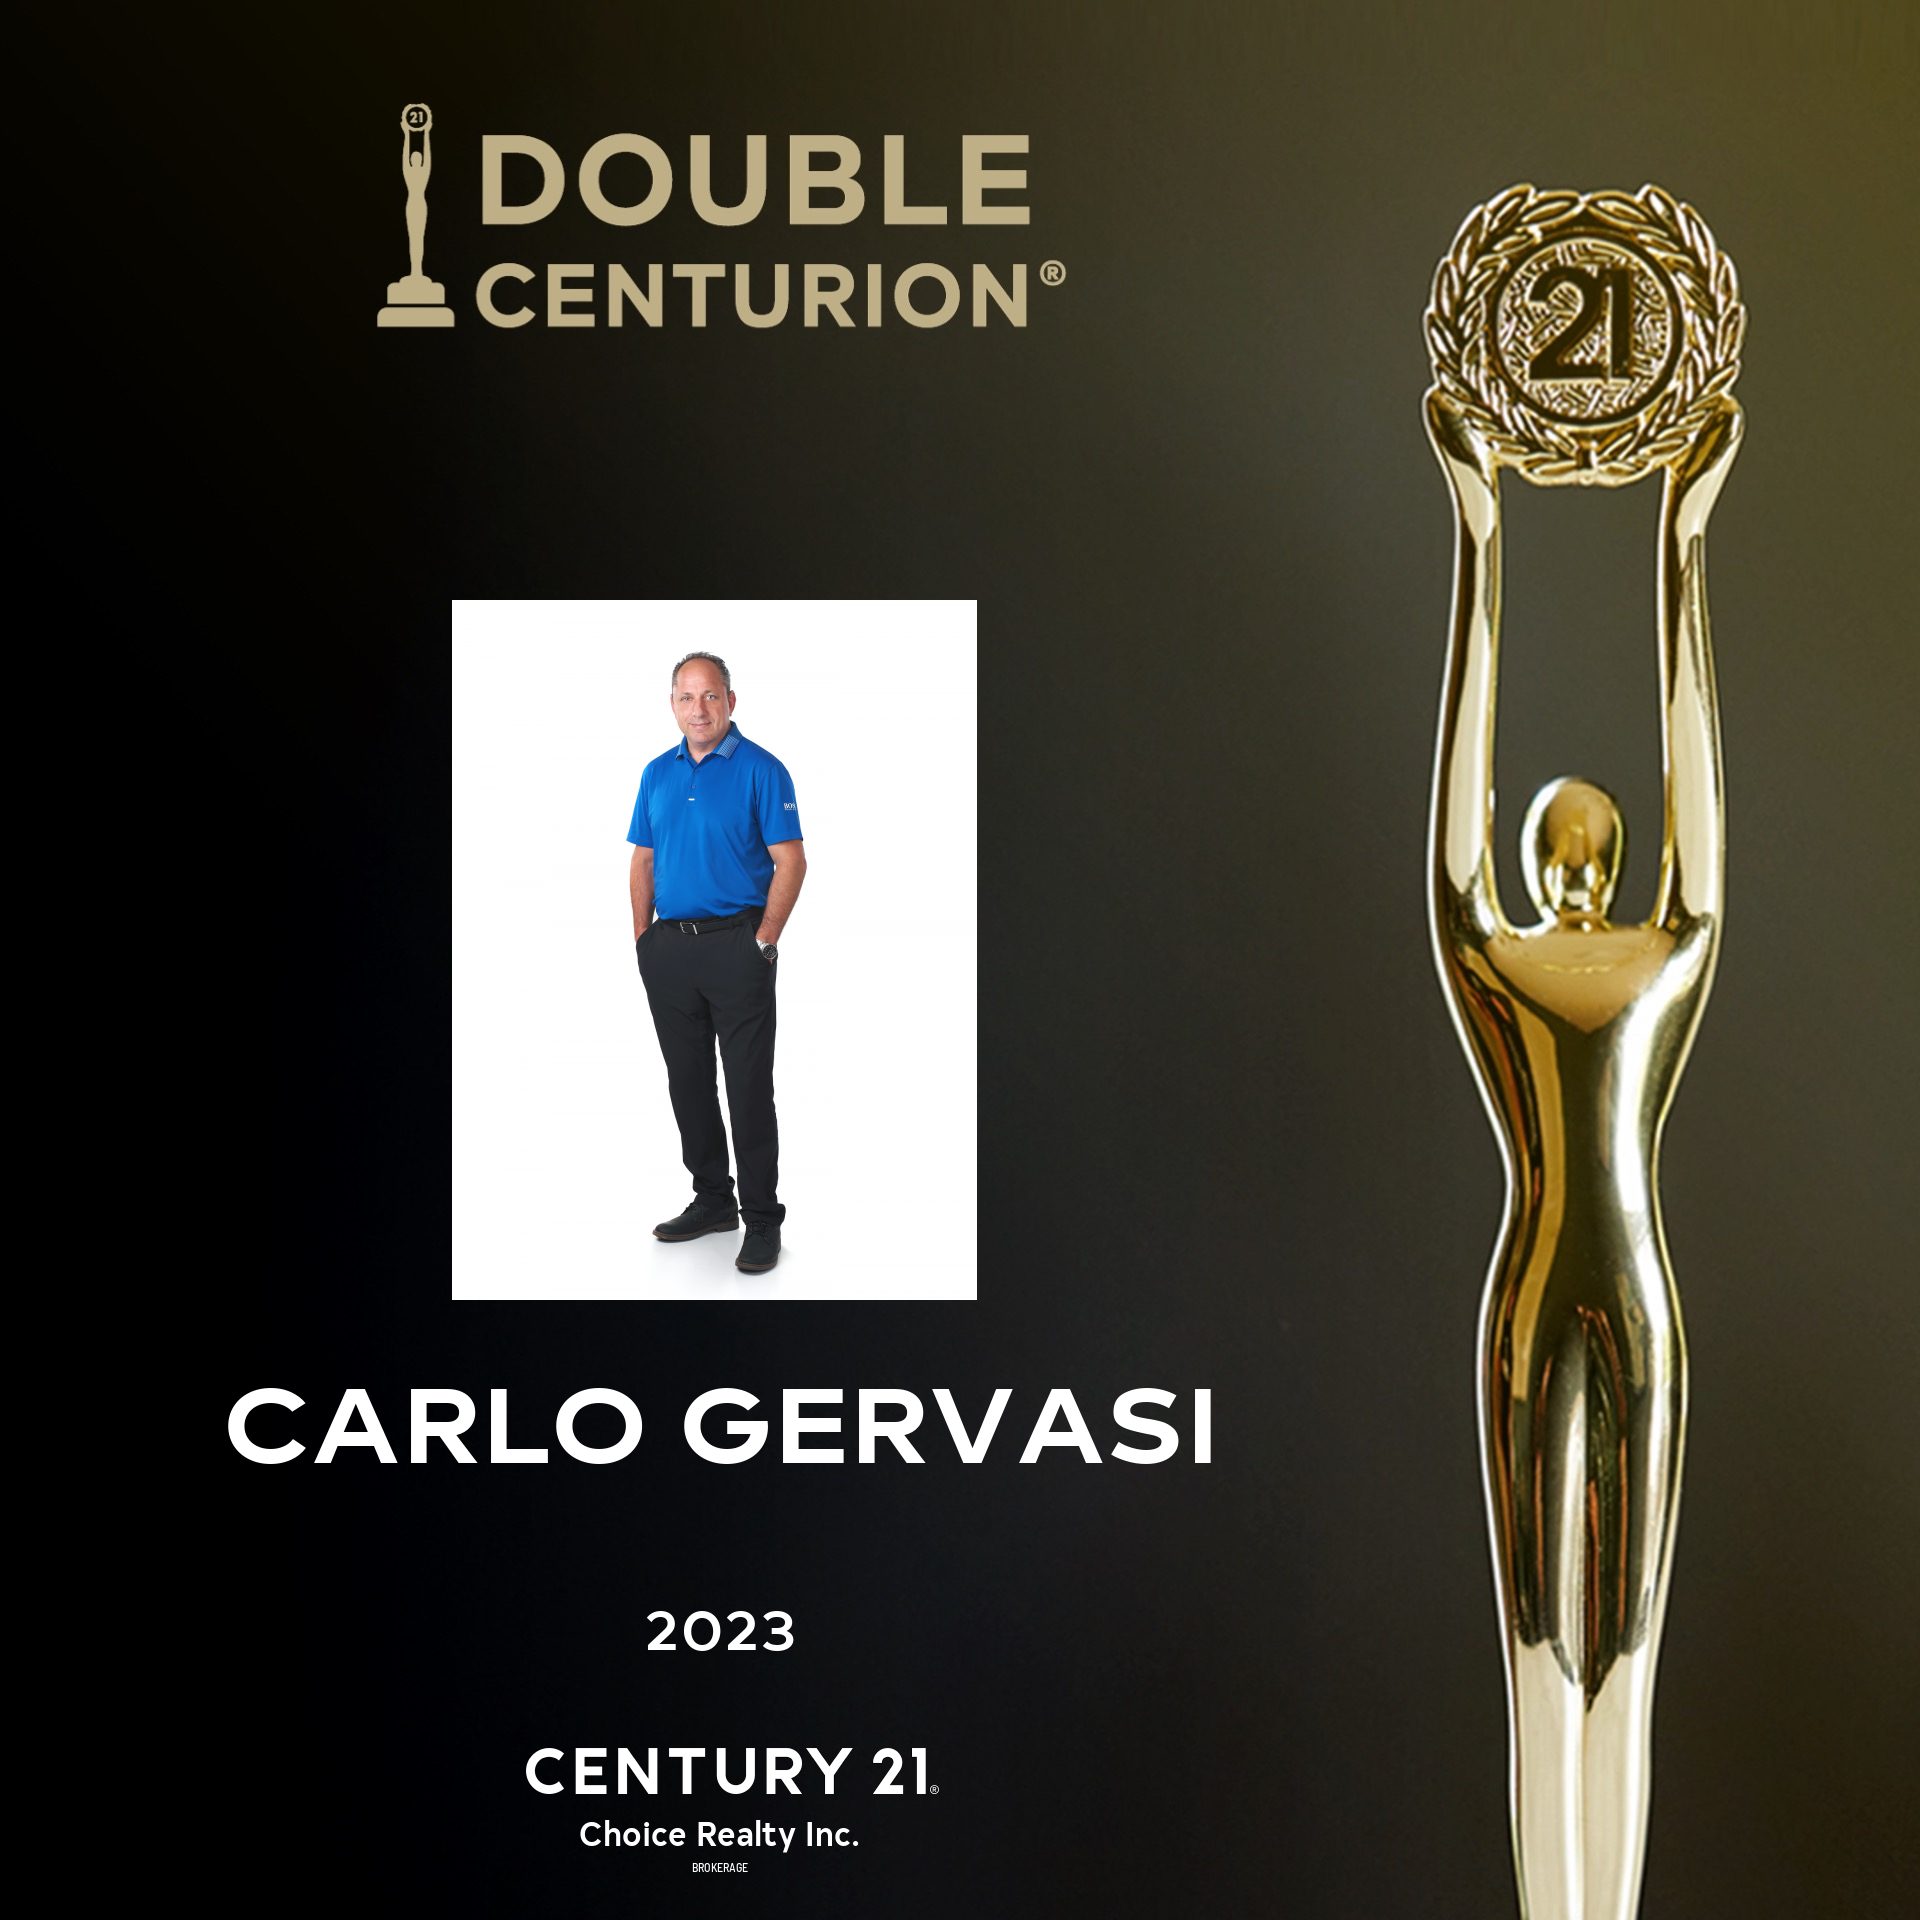 Carlo Gervasi Top Century21 Realtor in Sault Ste. Marie, Double Centurion Winner 3 Years in Row.